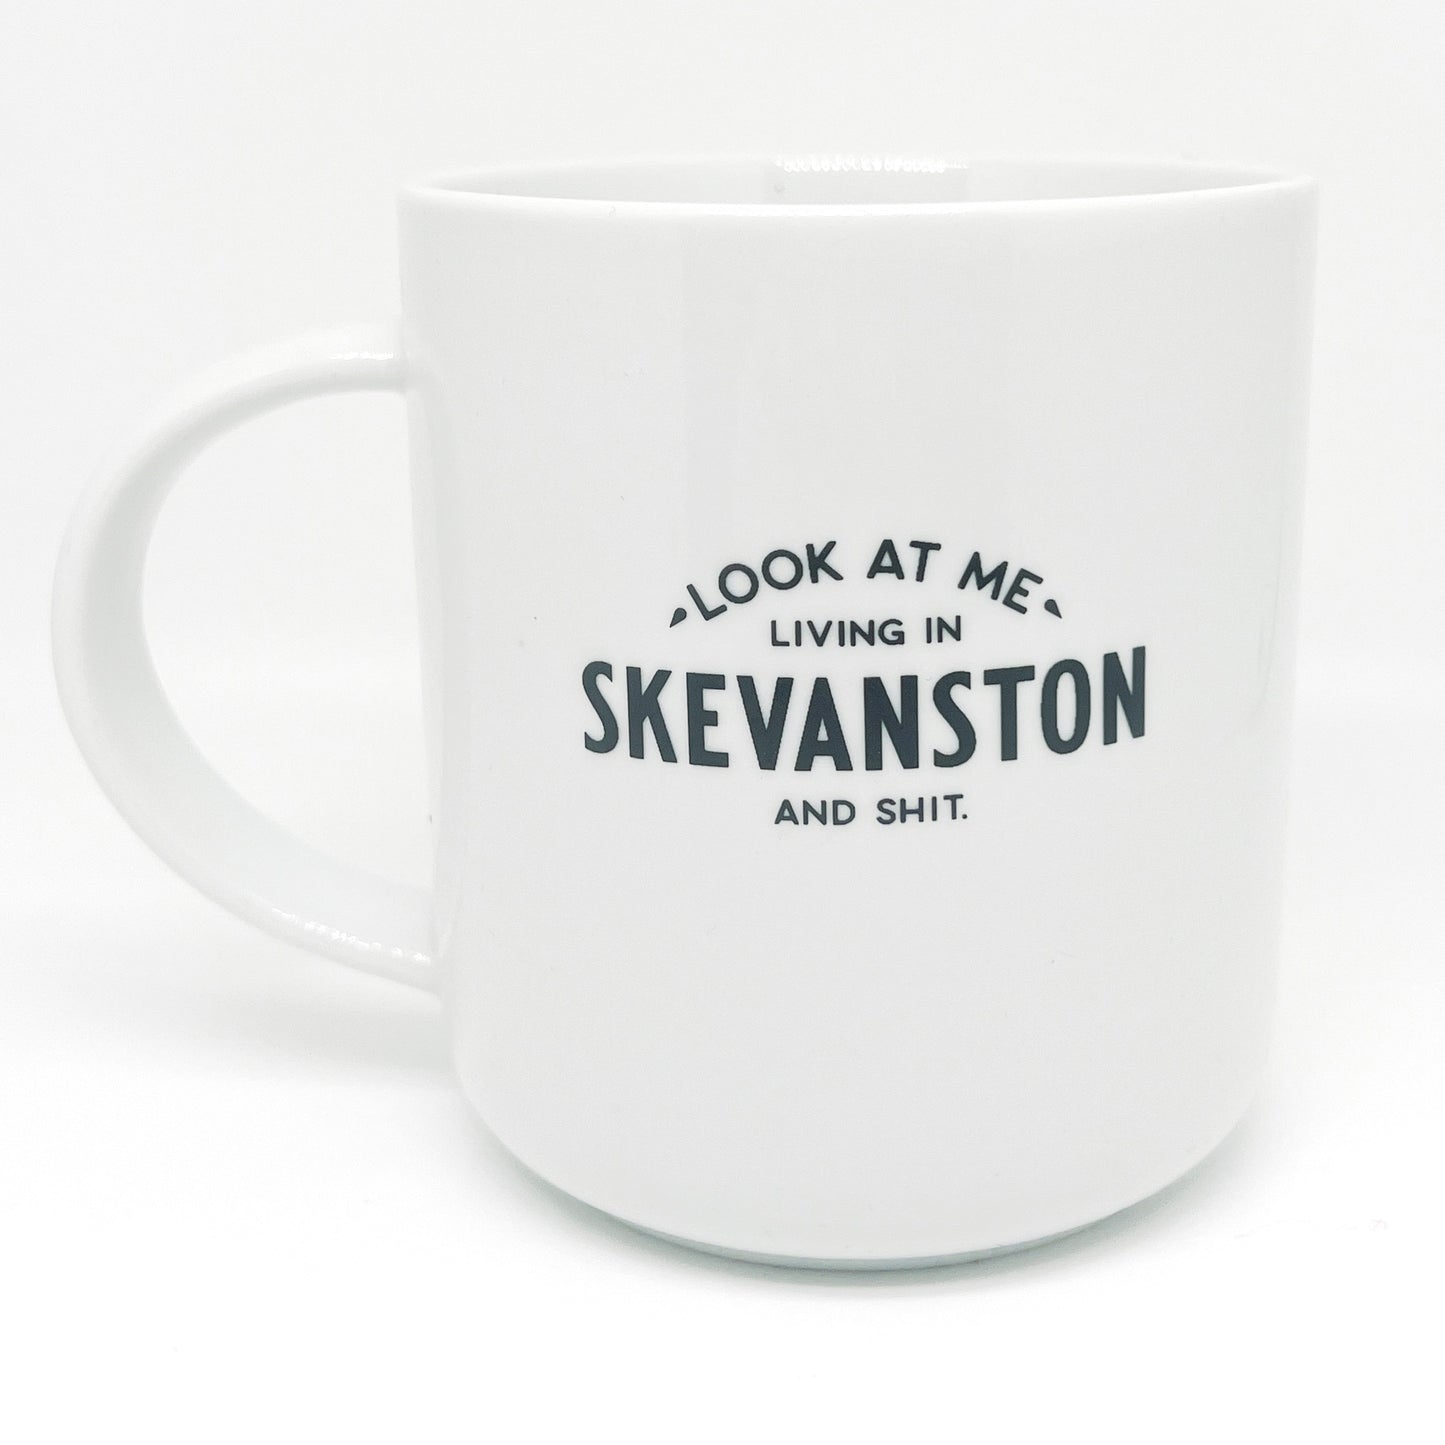 Skevanston Mug - "- Look At Me - Living In Skevanston And Shit."